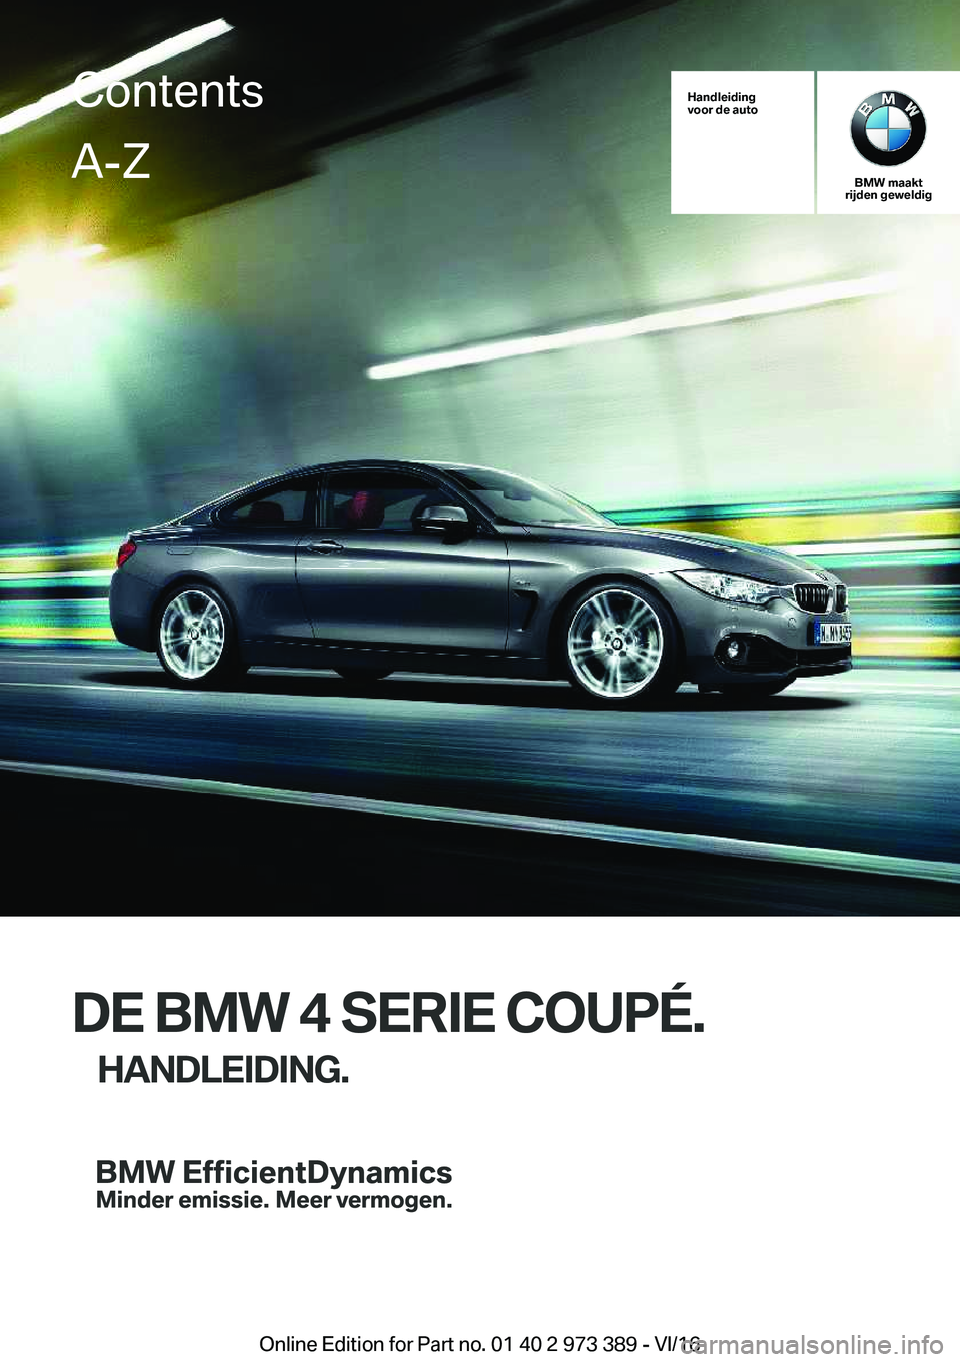 BMW 4 SERIES COUPE 2017  Instructieboekjes (in Dutch) �H�a�n�d�l�e�i�d�i�n�g
�v�o�o�r��d�e��a�u�t�o
�B�M�W��m�a�a�k�t
�r�i�j�d�e�n��g�e�w�e�l�d�i�g
�D�E��B�M�W��4��S�E�R�I�E��C�O�U�P�